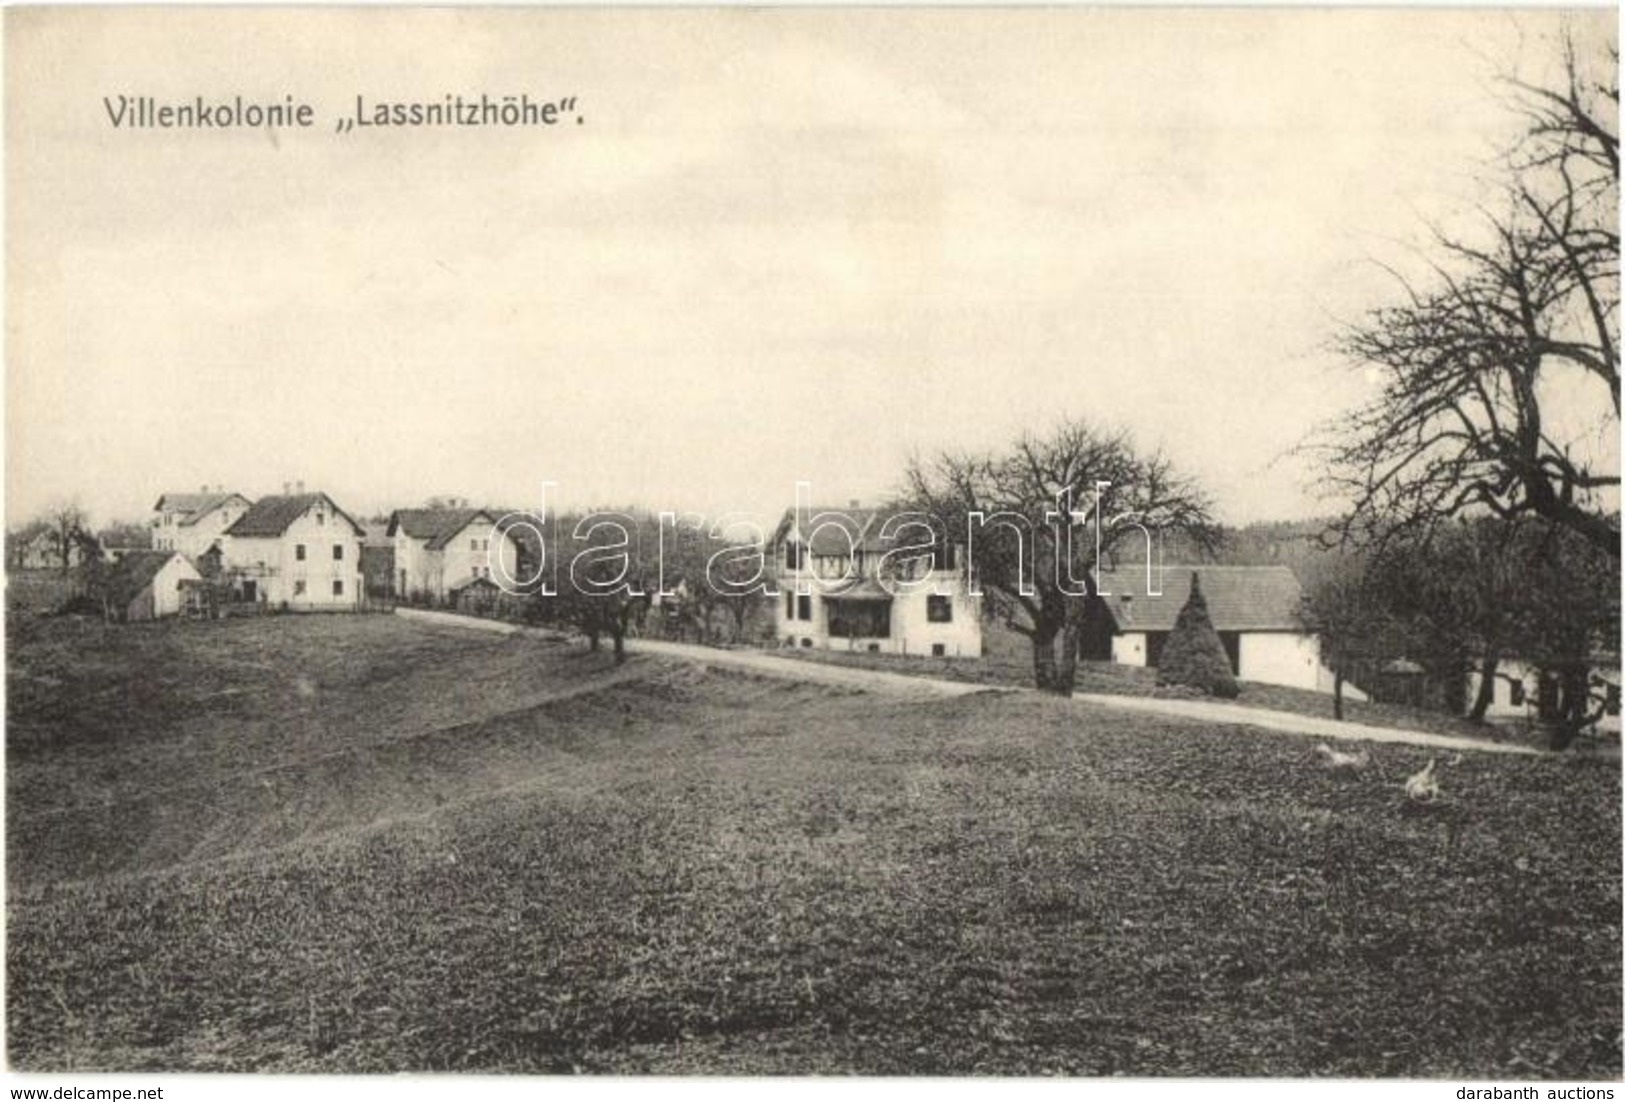 ** T1/T2 Laßnitzhöhe, Lassnitzhöhe; Villenkolonie. Verlag Ida Mölzer, Albin Sussitz / Villa Colony - Unclassified